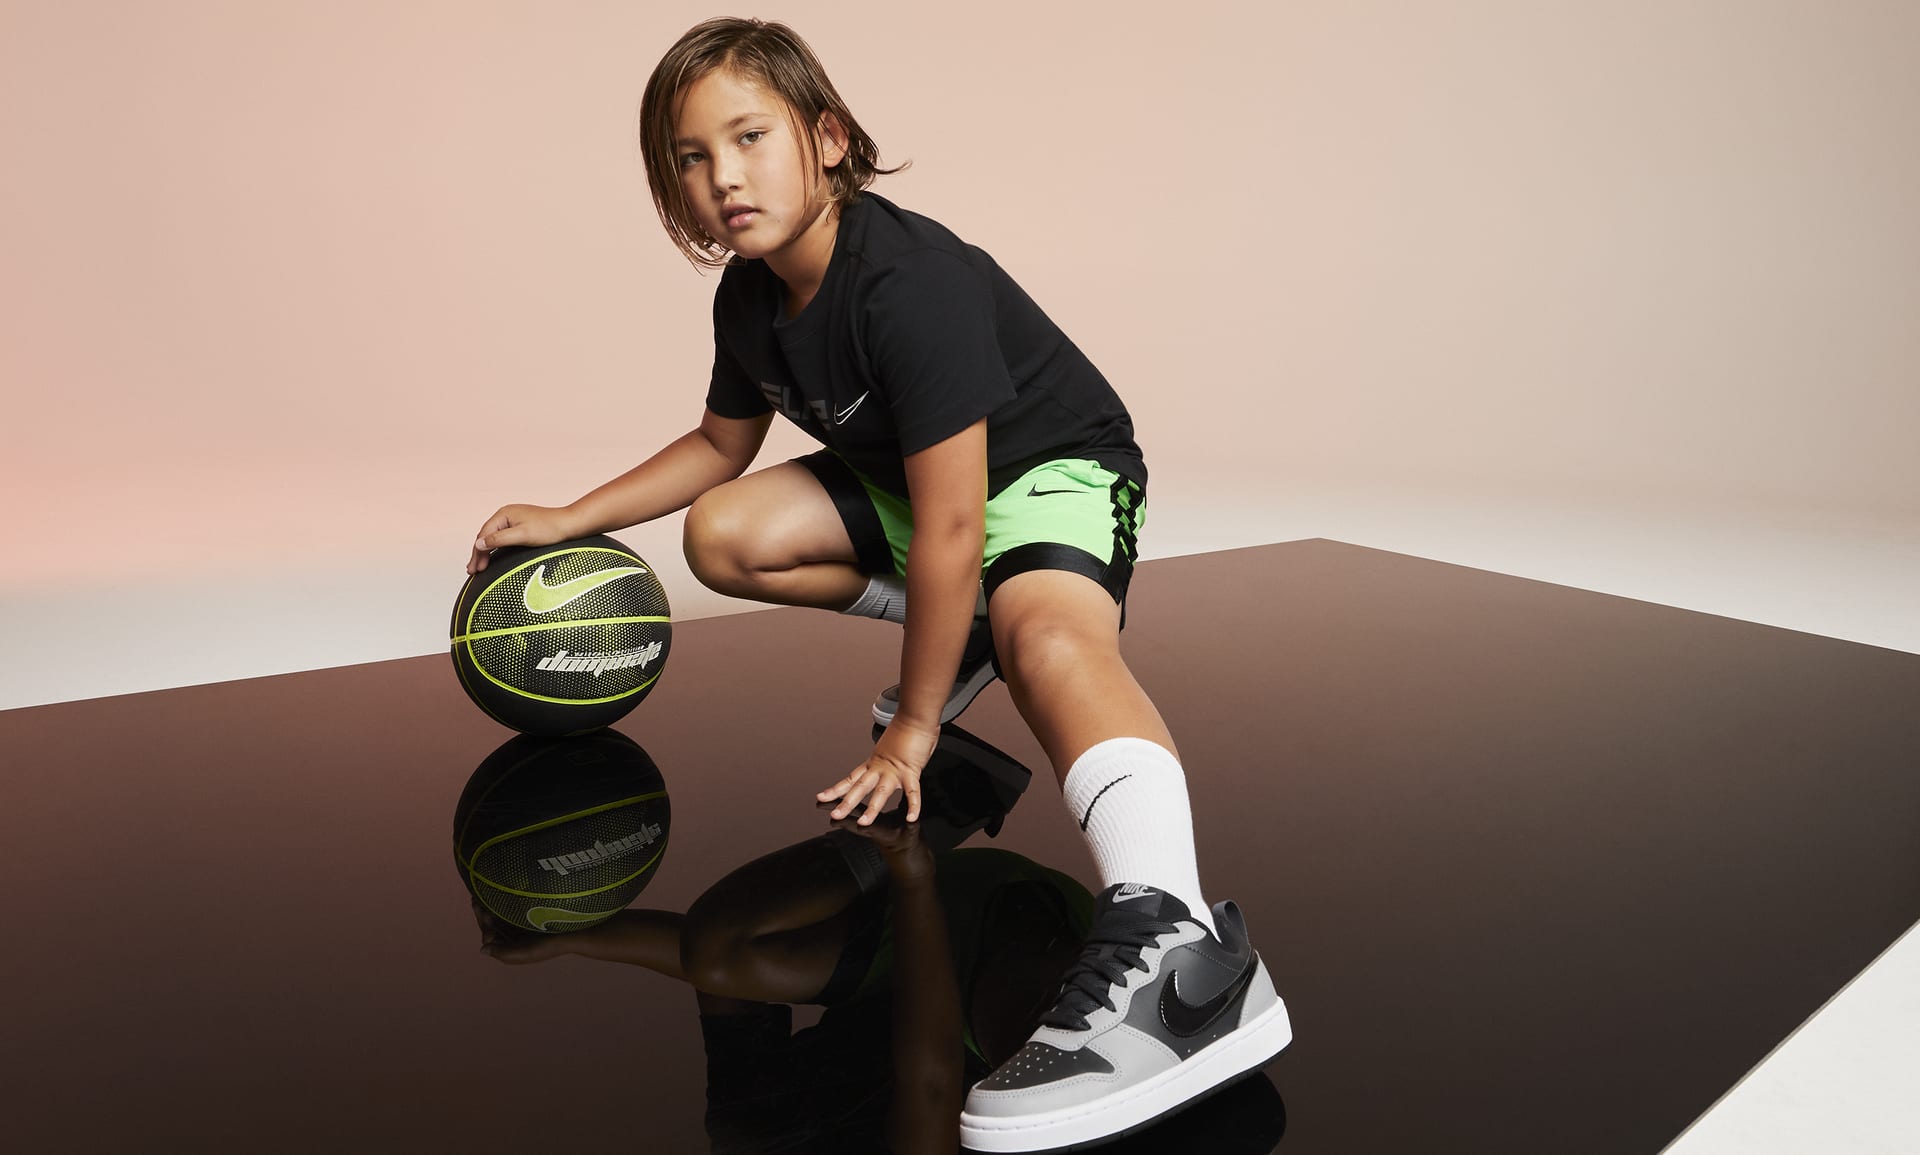 Nike Kids' Court Borough Low 2 Shoes